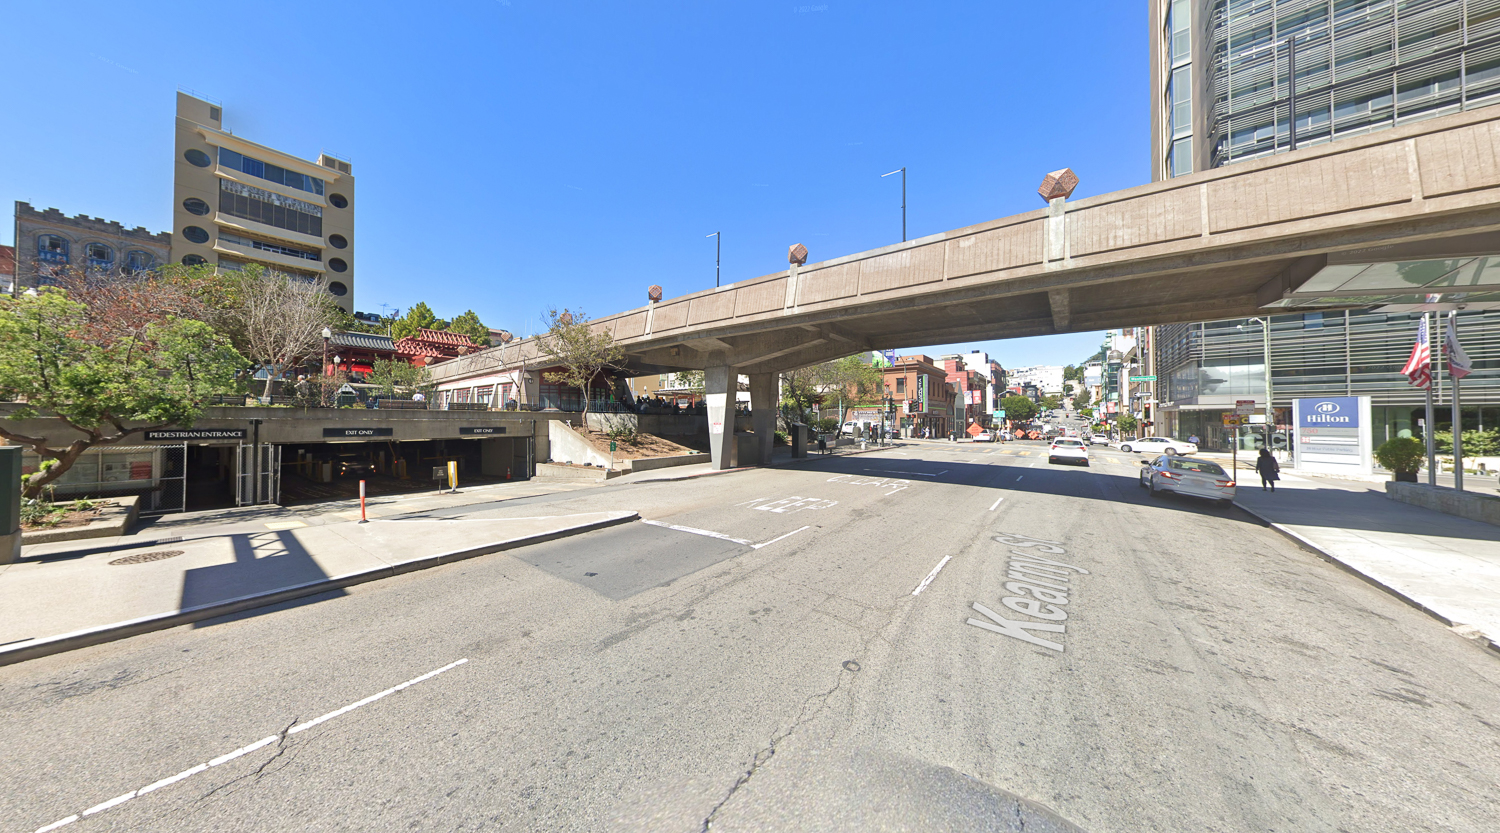 Kearny Street pedestrian bridge and Portsmouth Square, image via Google Street View